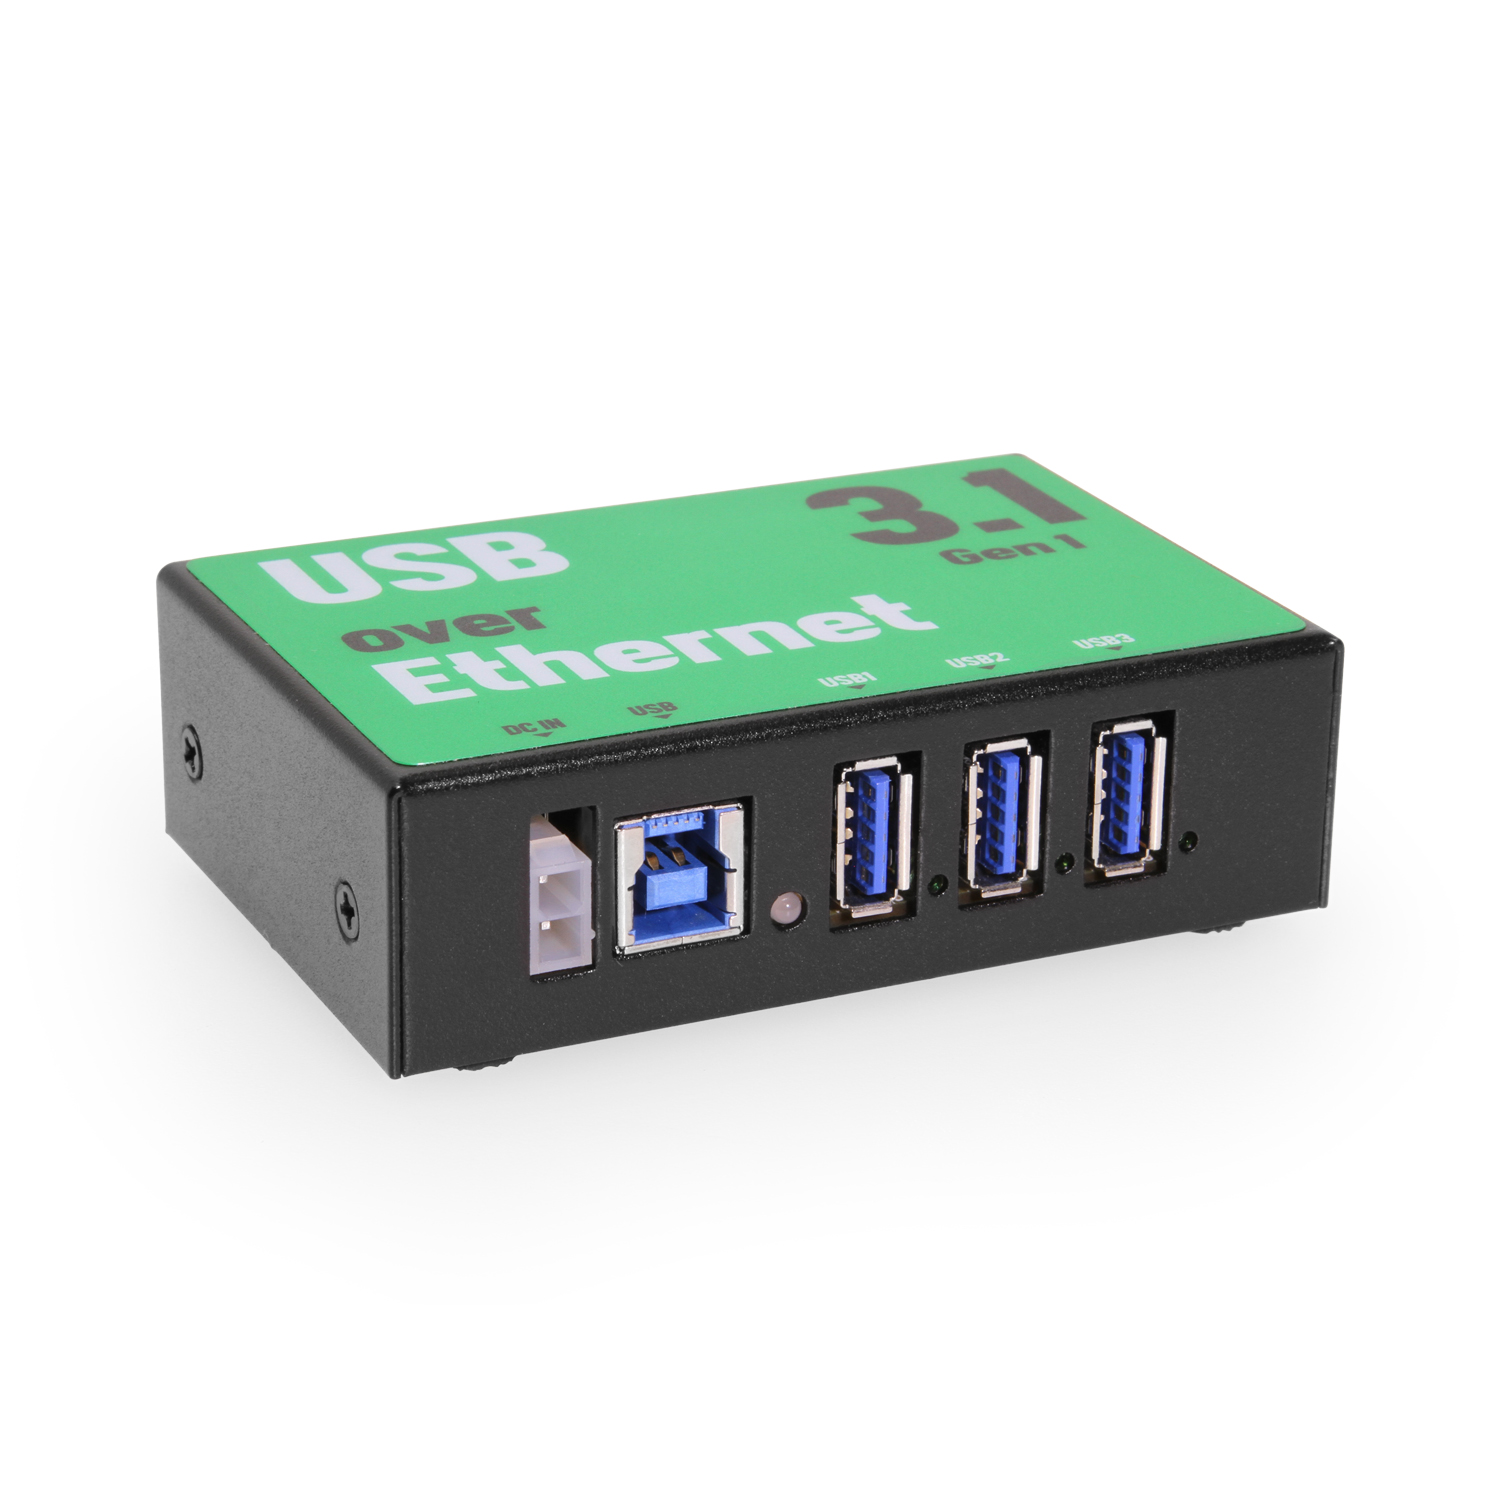 Port USB Gen 1 Over Network Device Sharing Hub w/ Port Status LEDs Coolgear